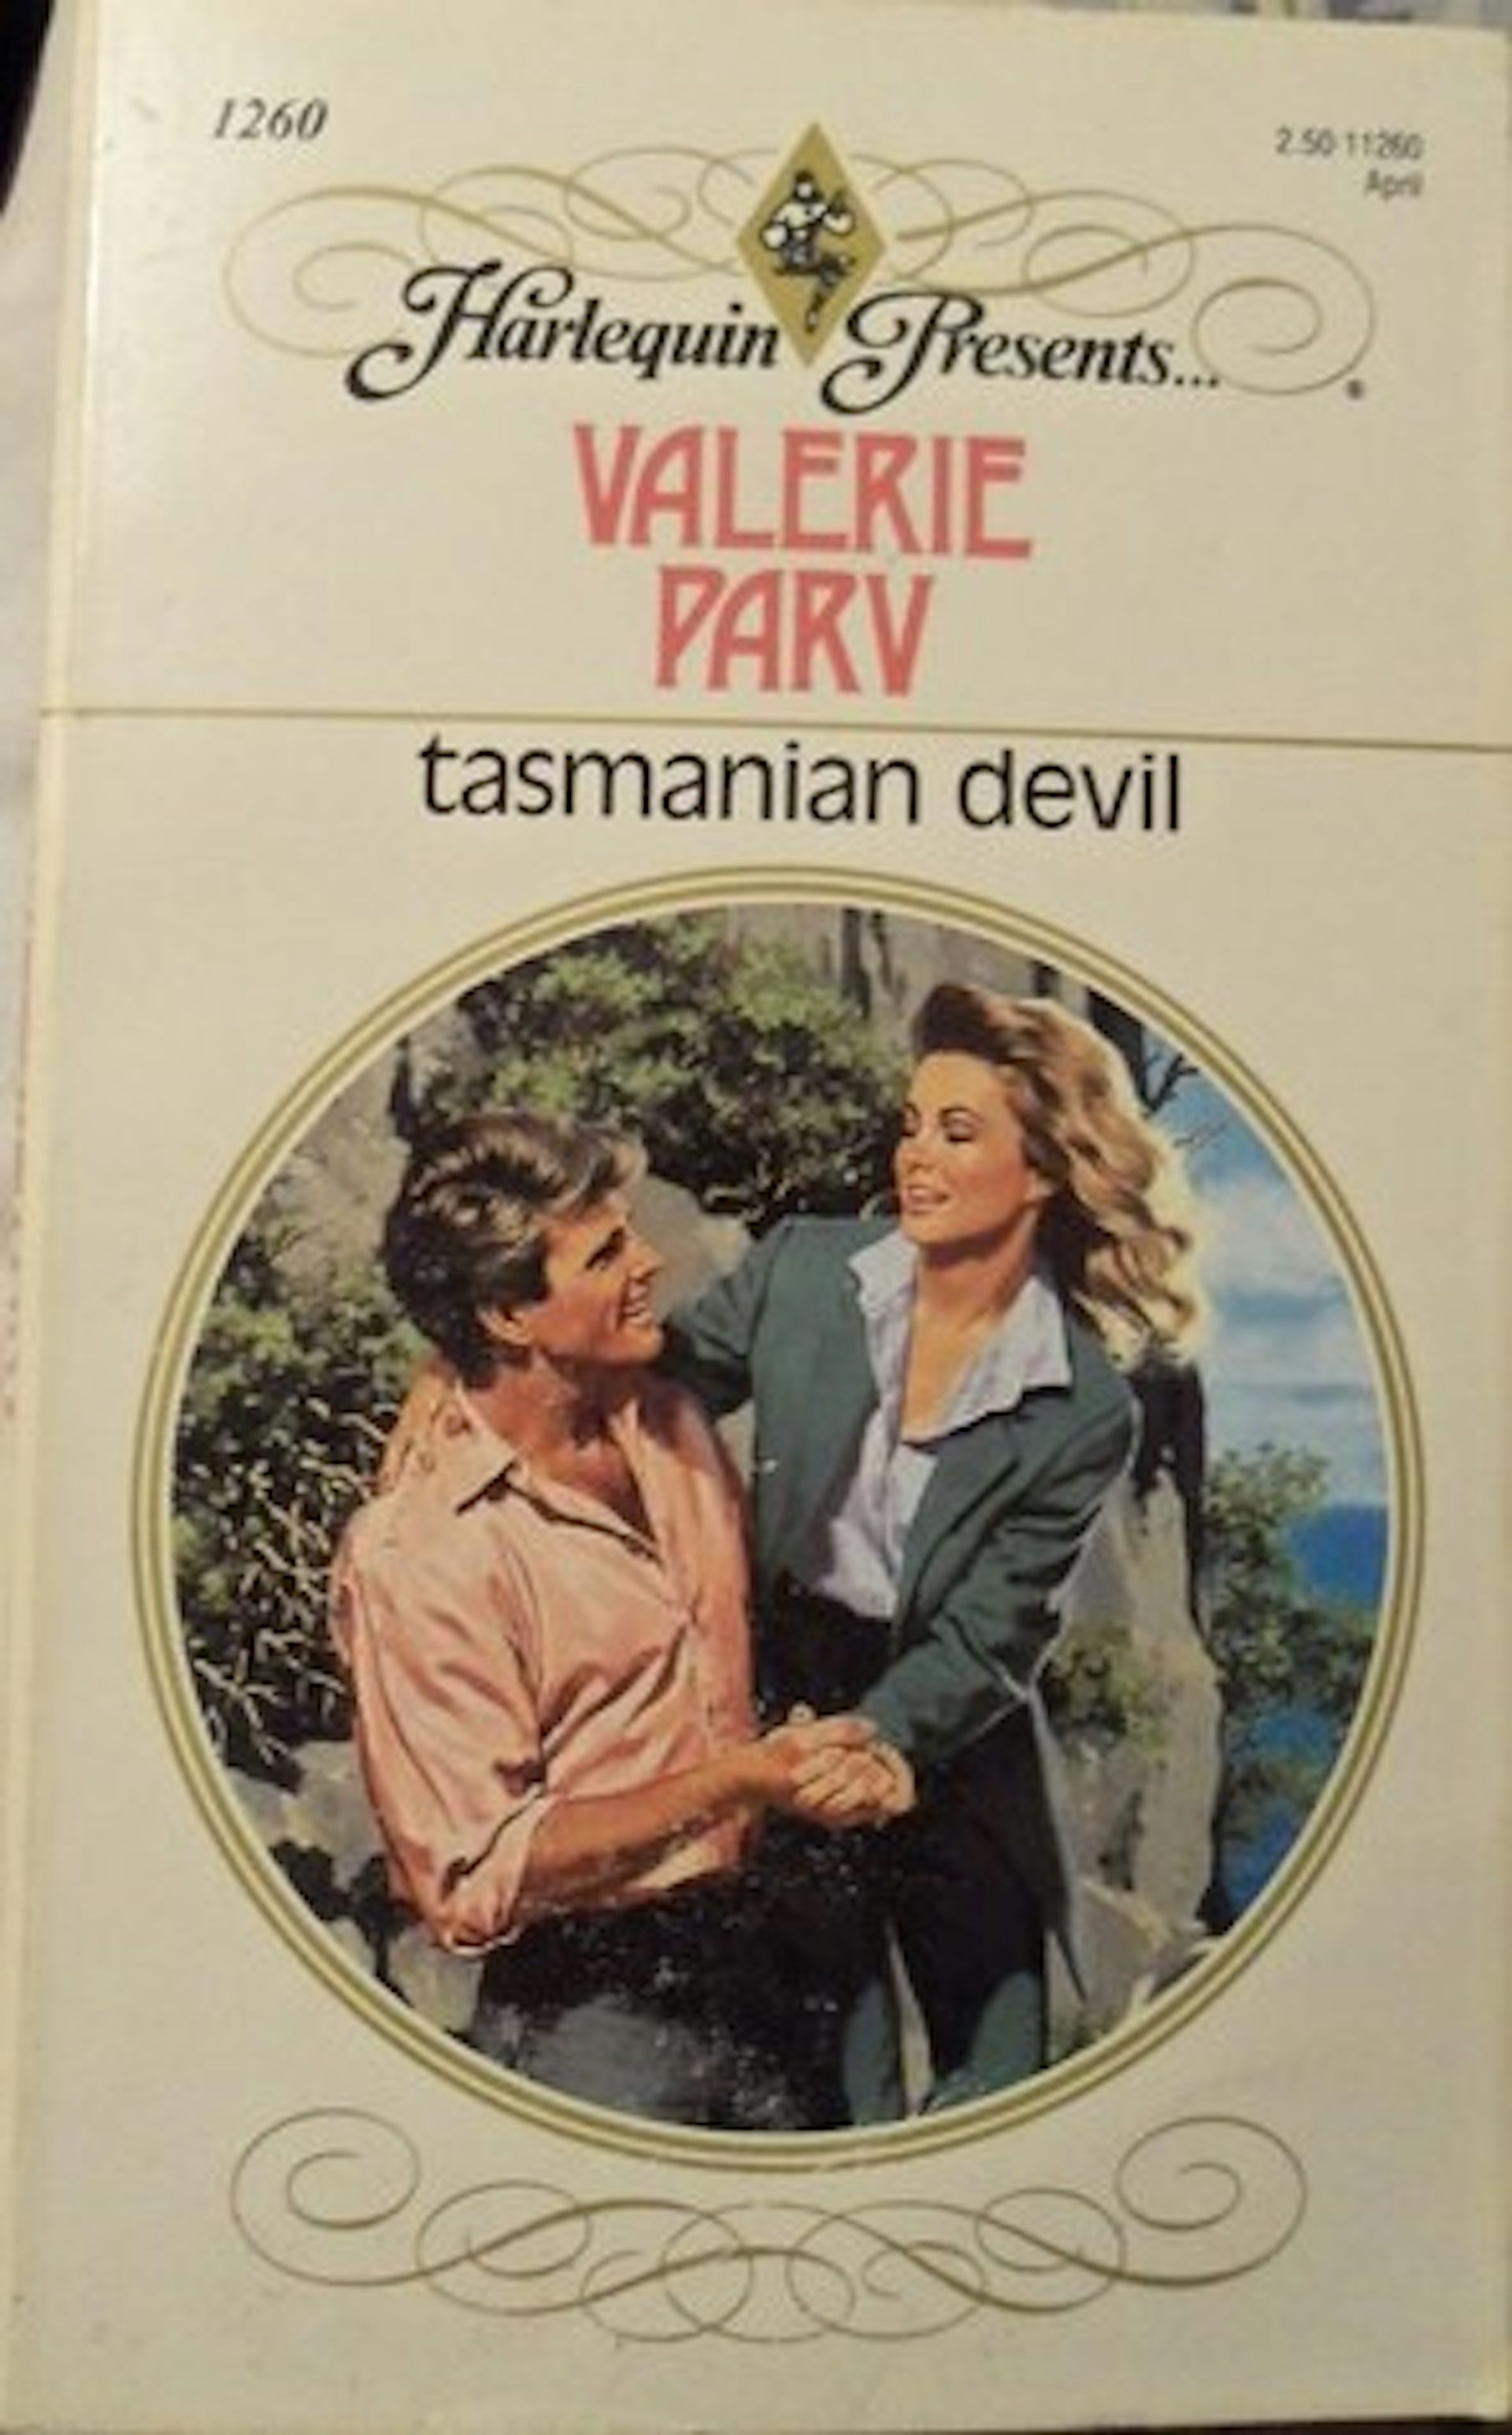 read 1970s harlequin romance novels online for free